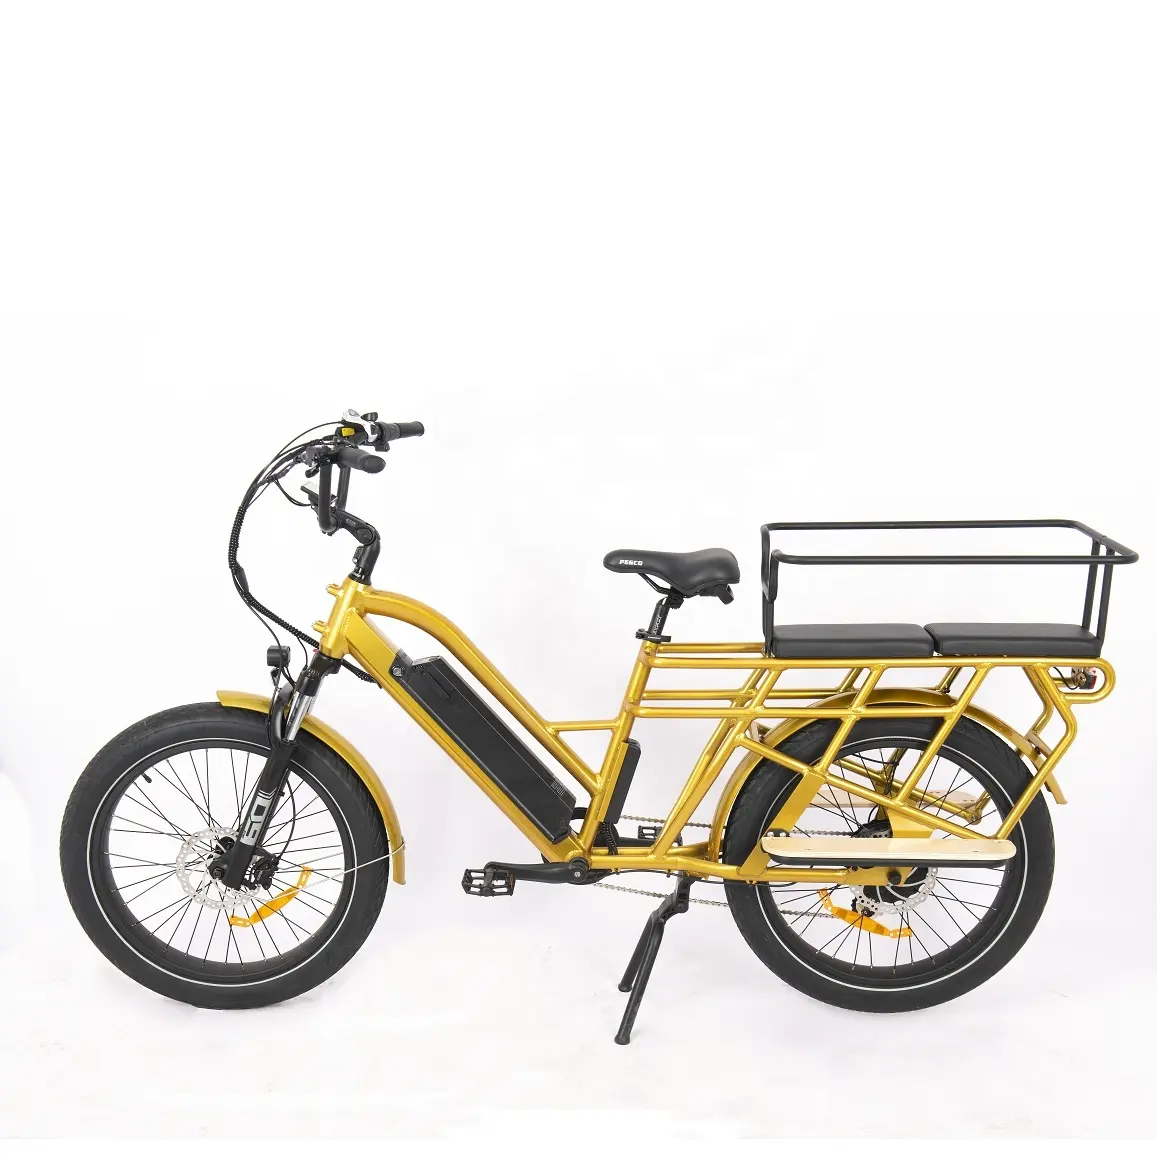 Bicicleta elétrica de carga dupla, banco de carga para bicicleta com motor traseiro e bateria de lítio